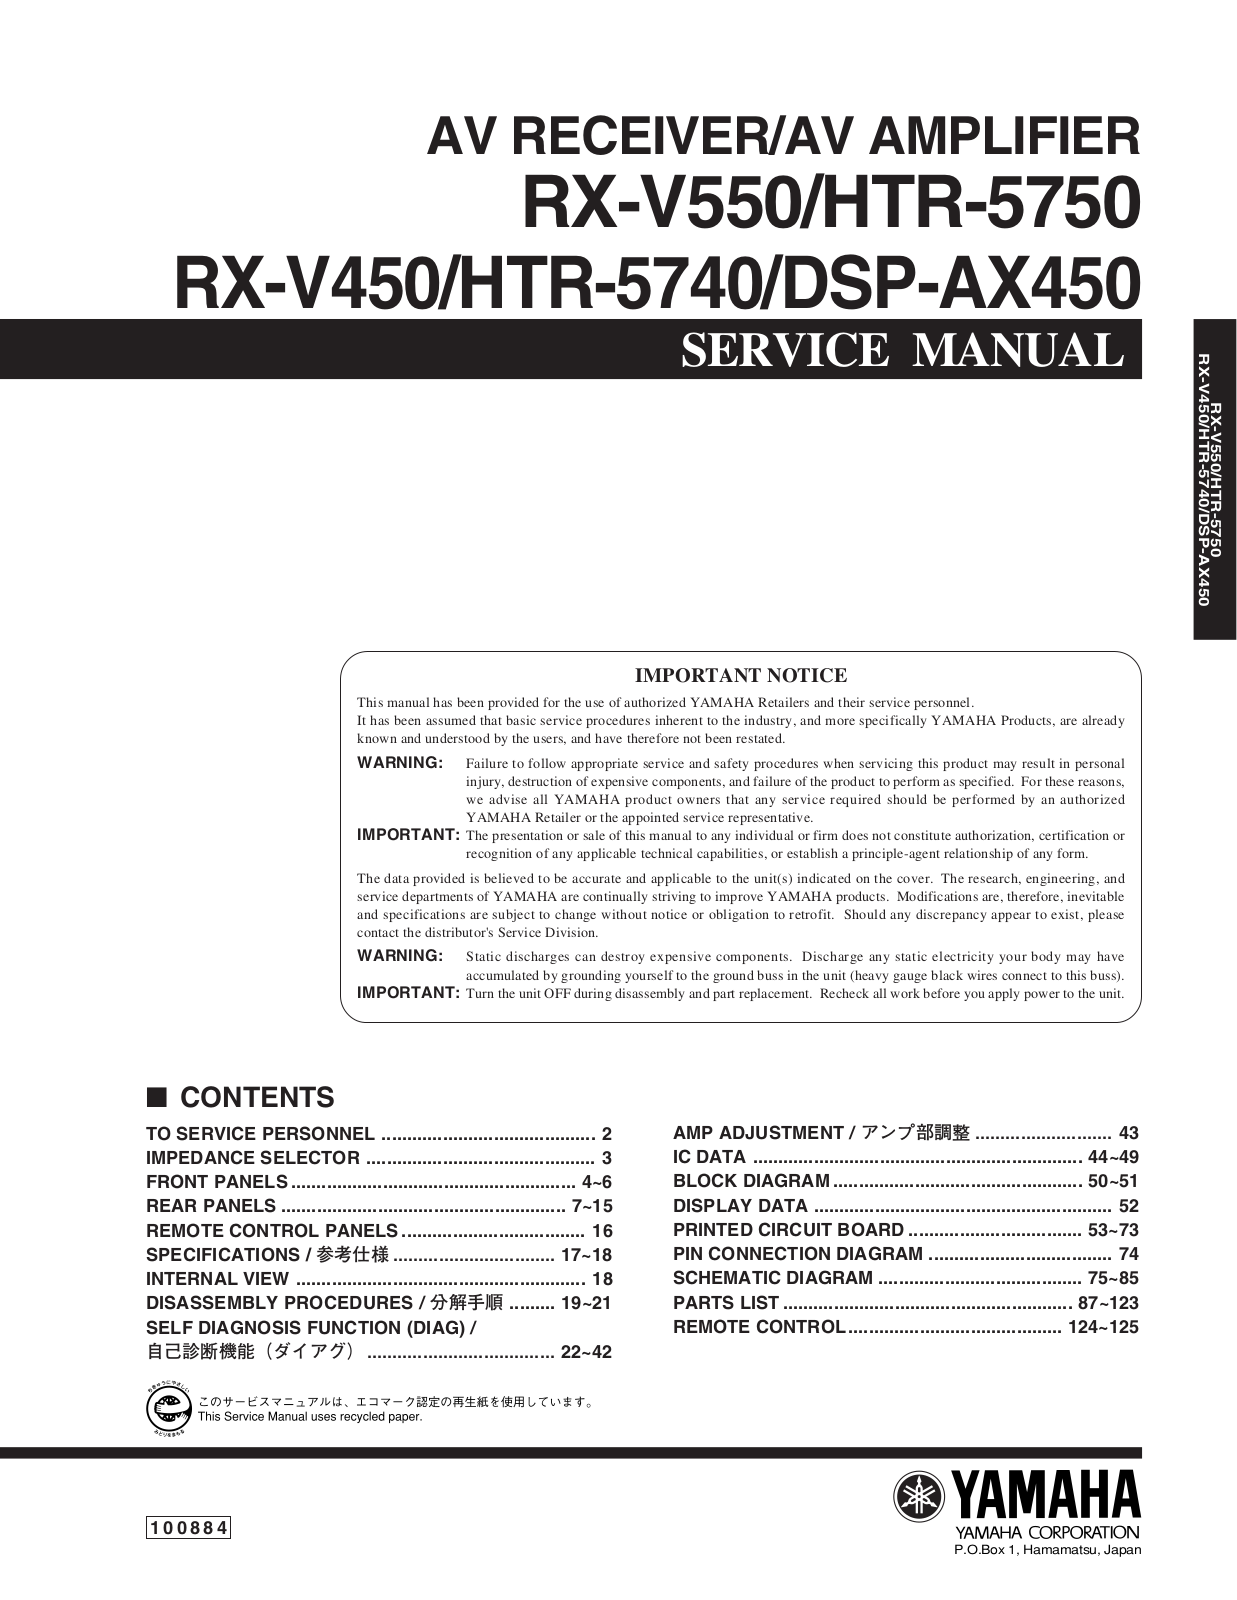 Yamaha DSPAX-450 Service manual